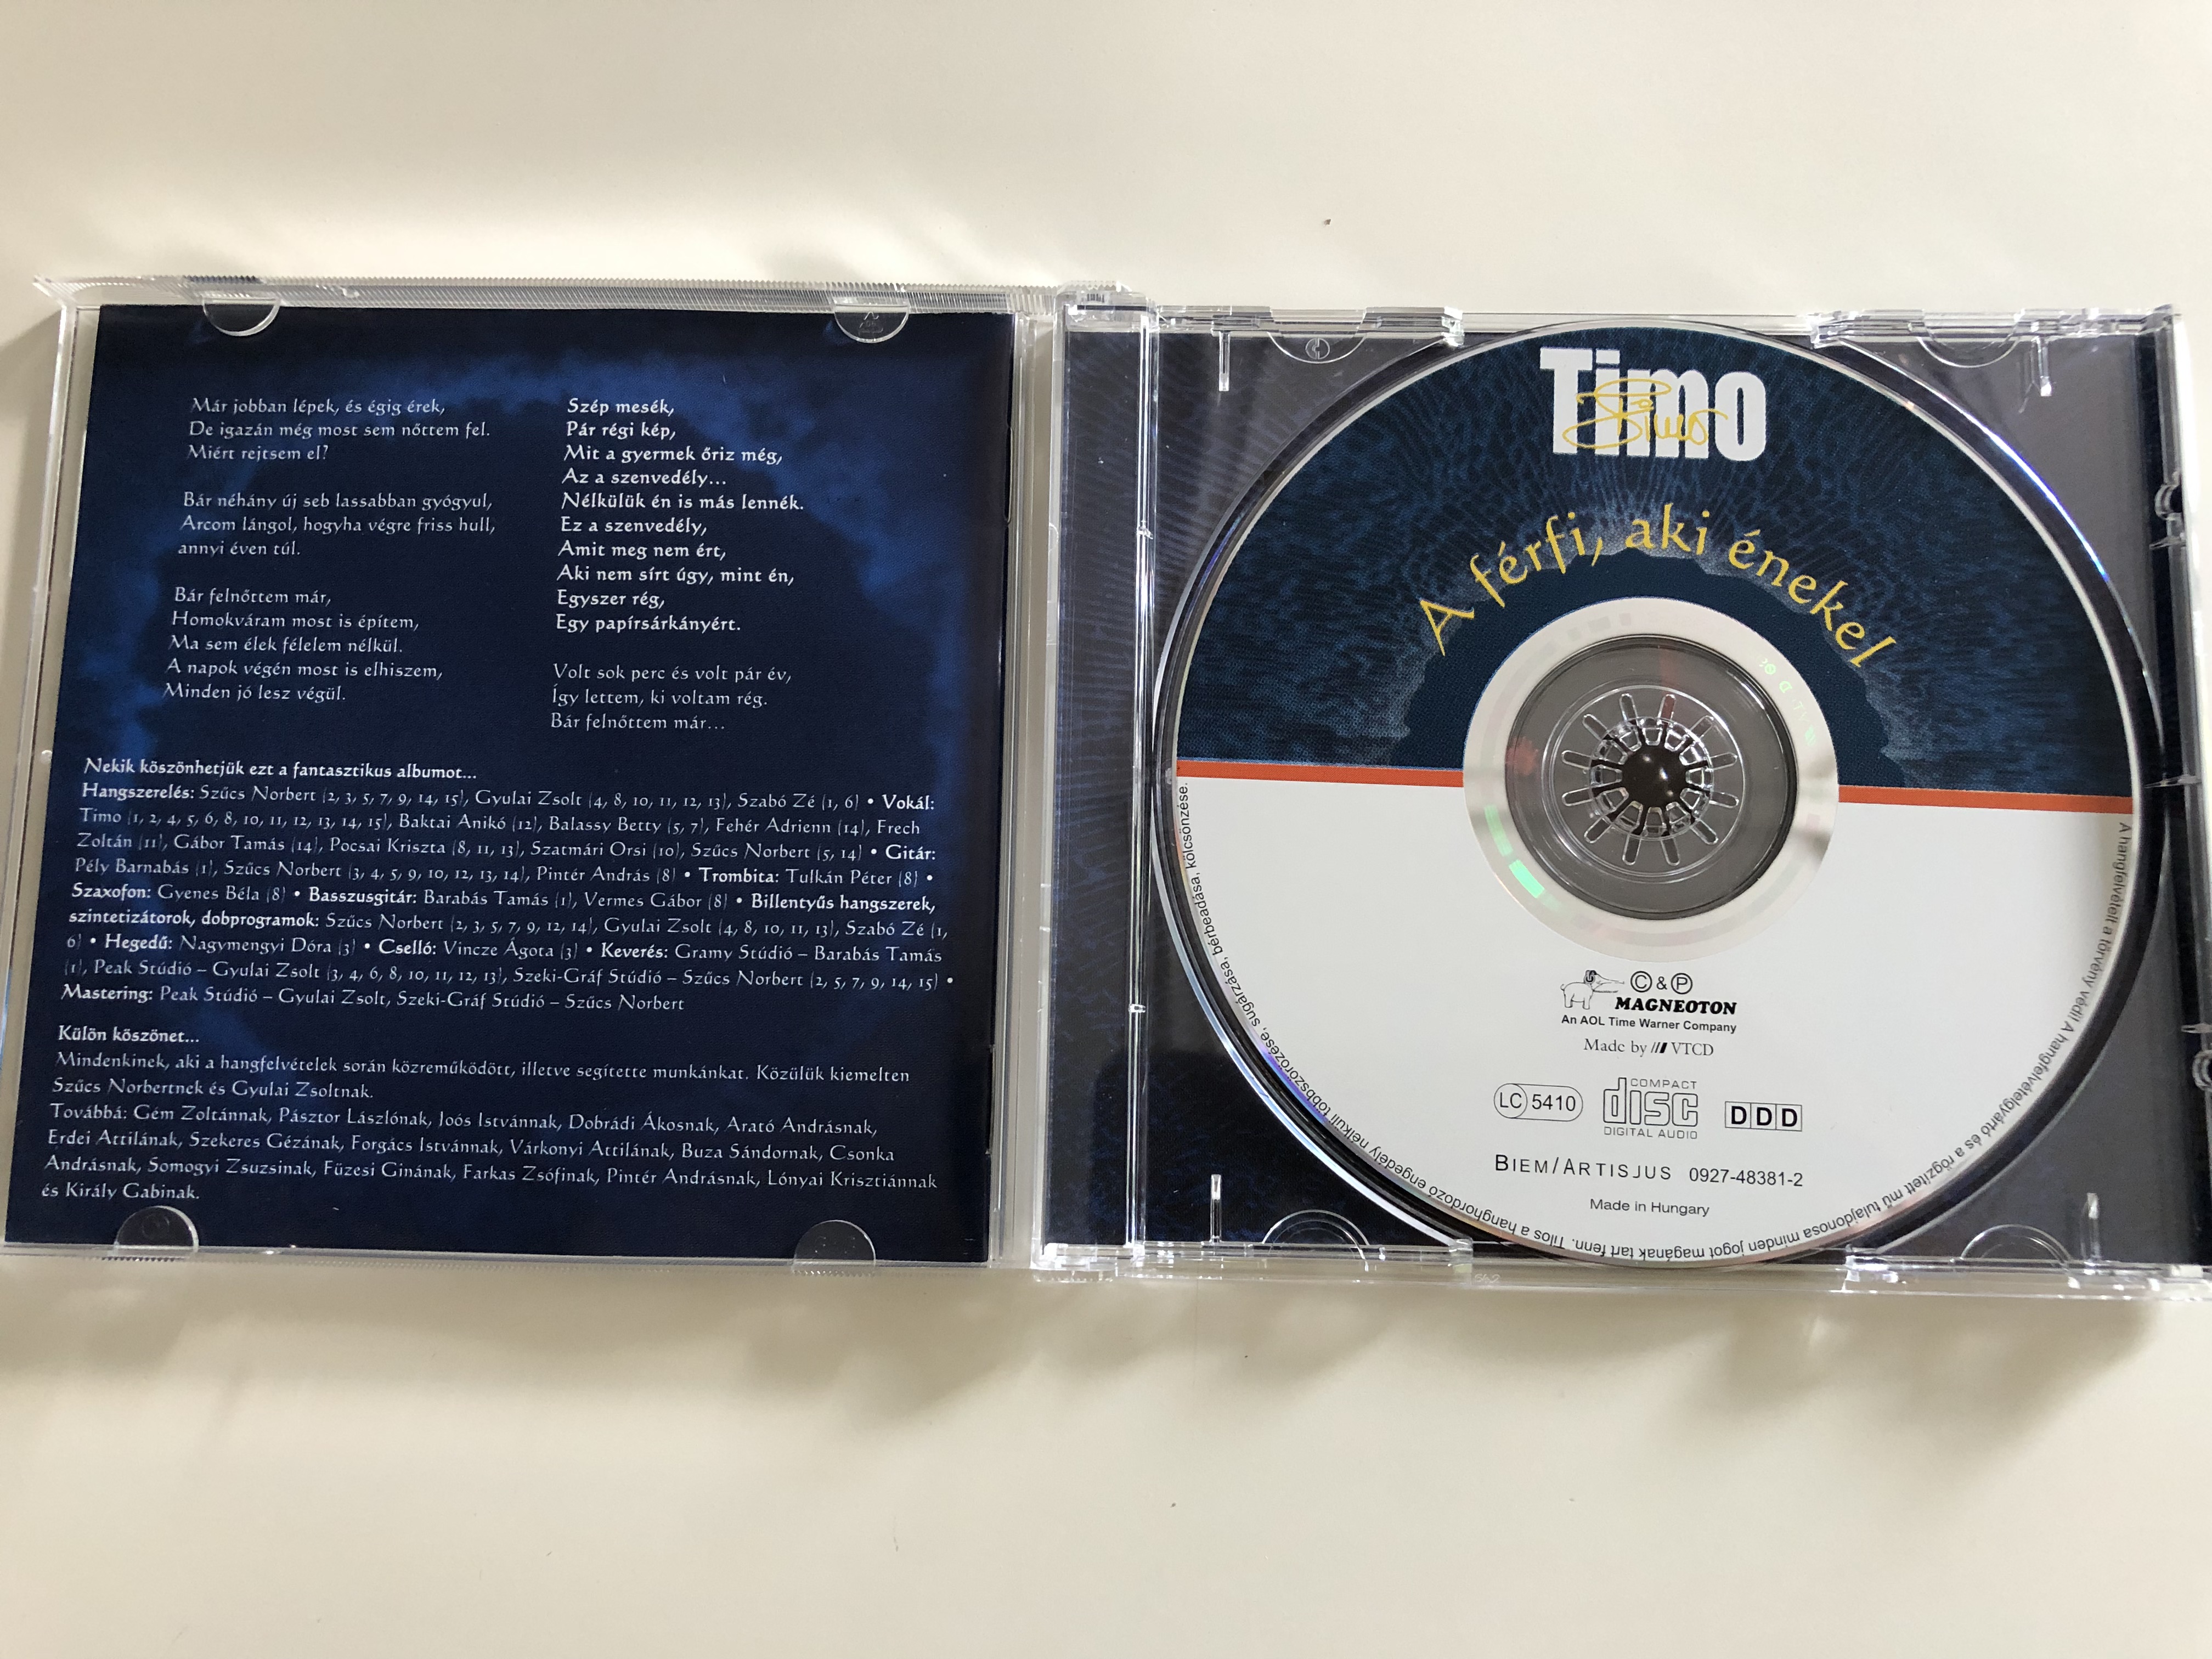 timo-a-f-rfi-aki-nekel-magneoton-audio-cd-2002-0927-48381-2-6-.jpg